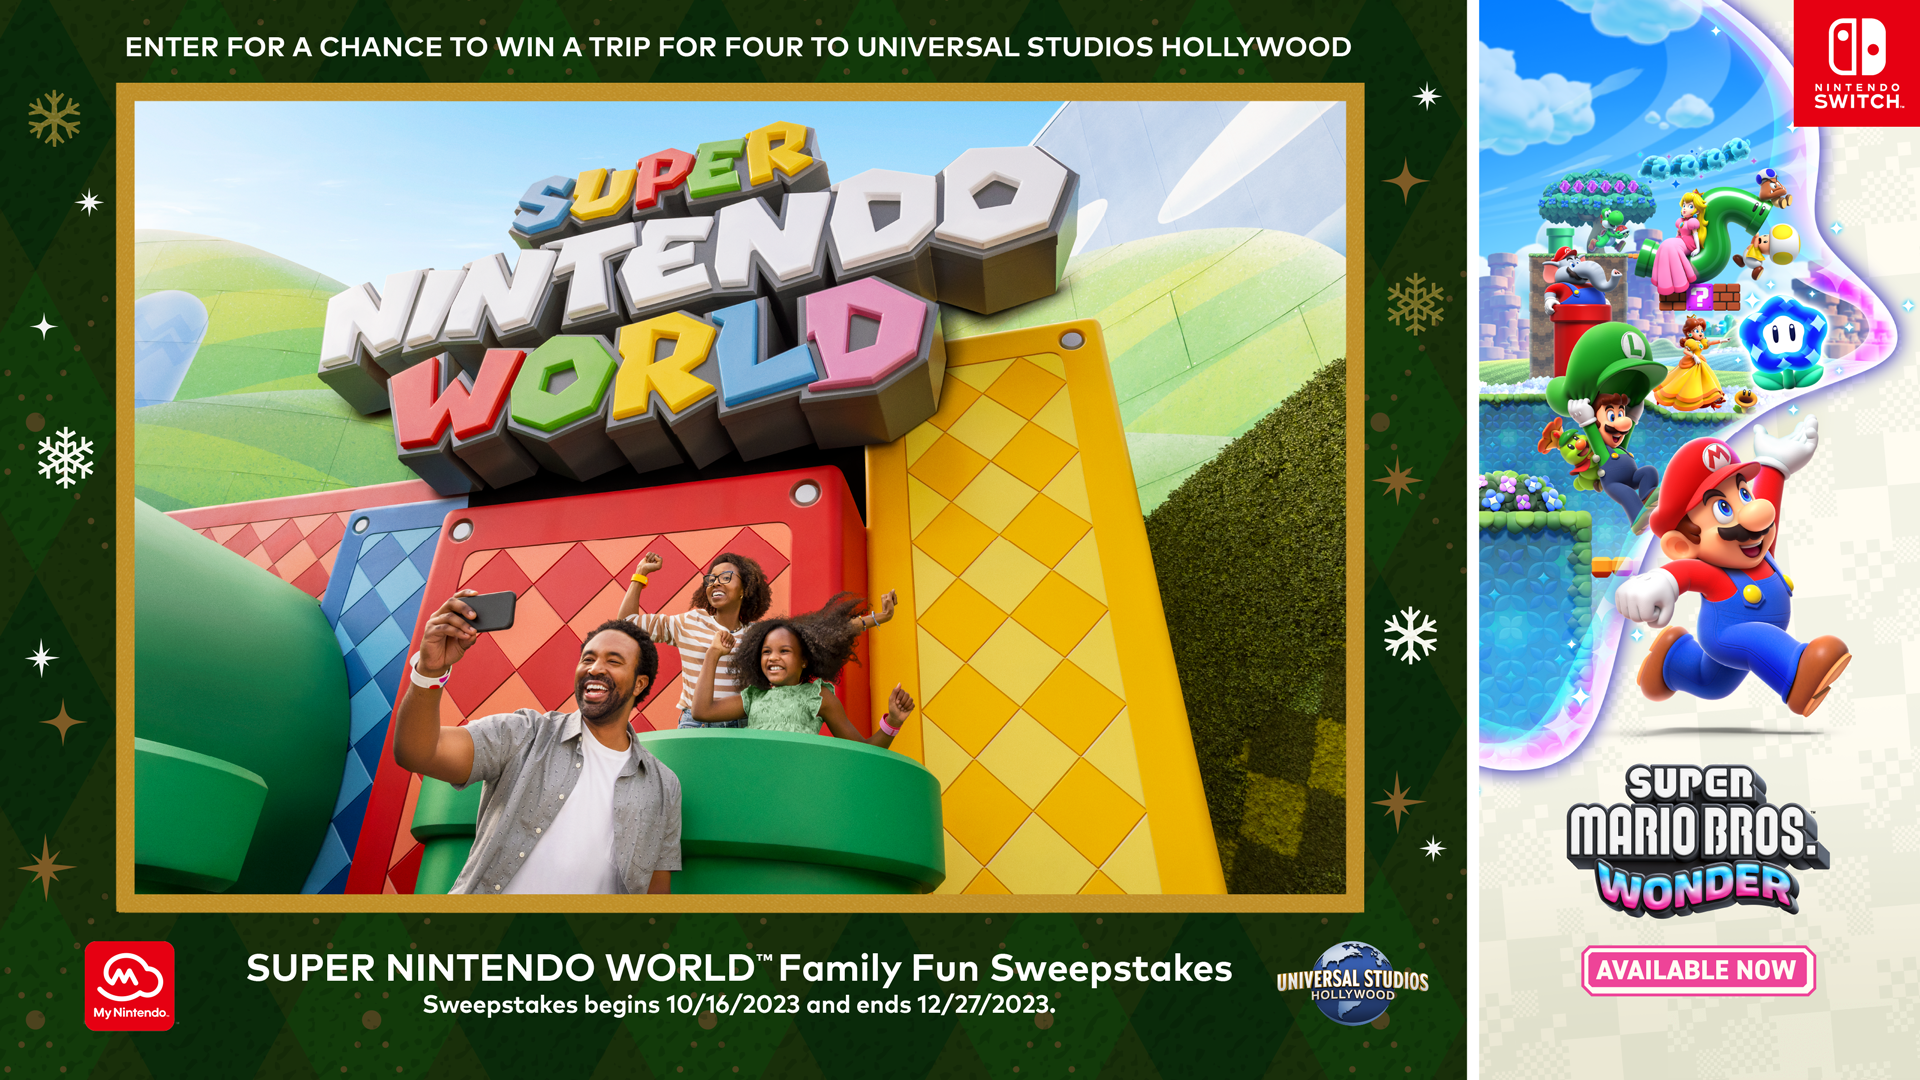 My Nintendo™ SUPER NINTENDO WORLD™ Family Fun Sweepstakes